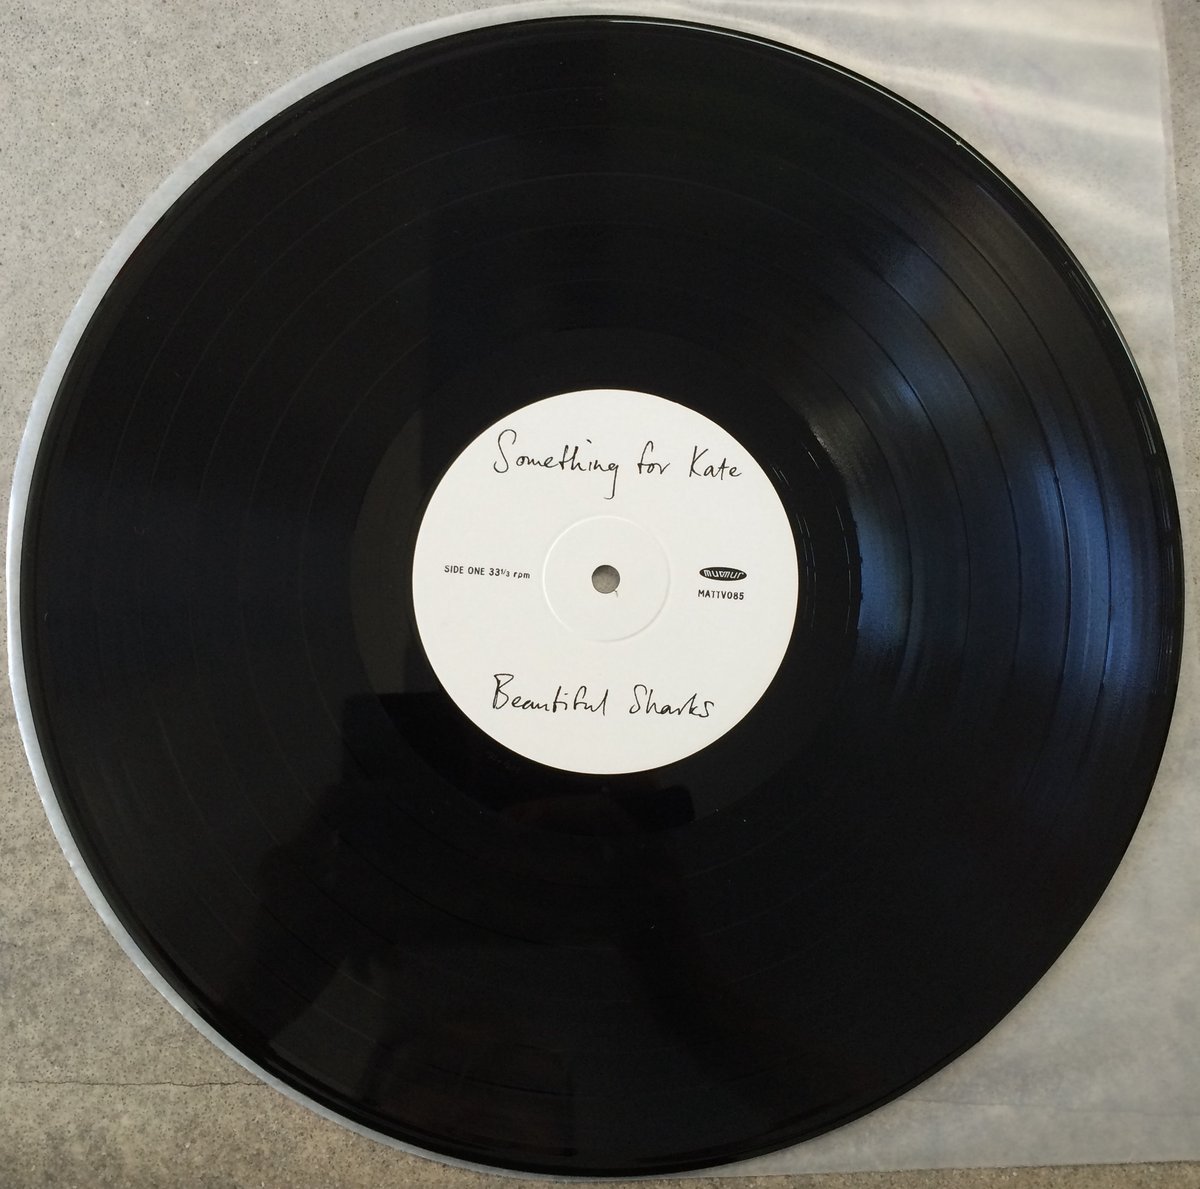 Image of Something for Kate -'Beautiful Sharks'  12 inch vinyl album - original pressing